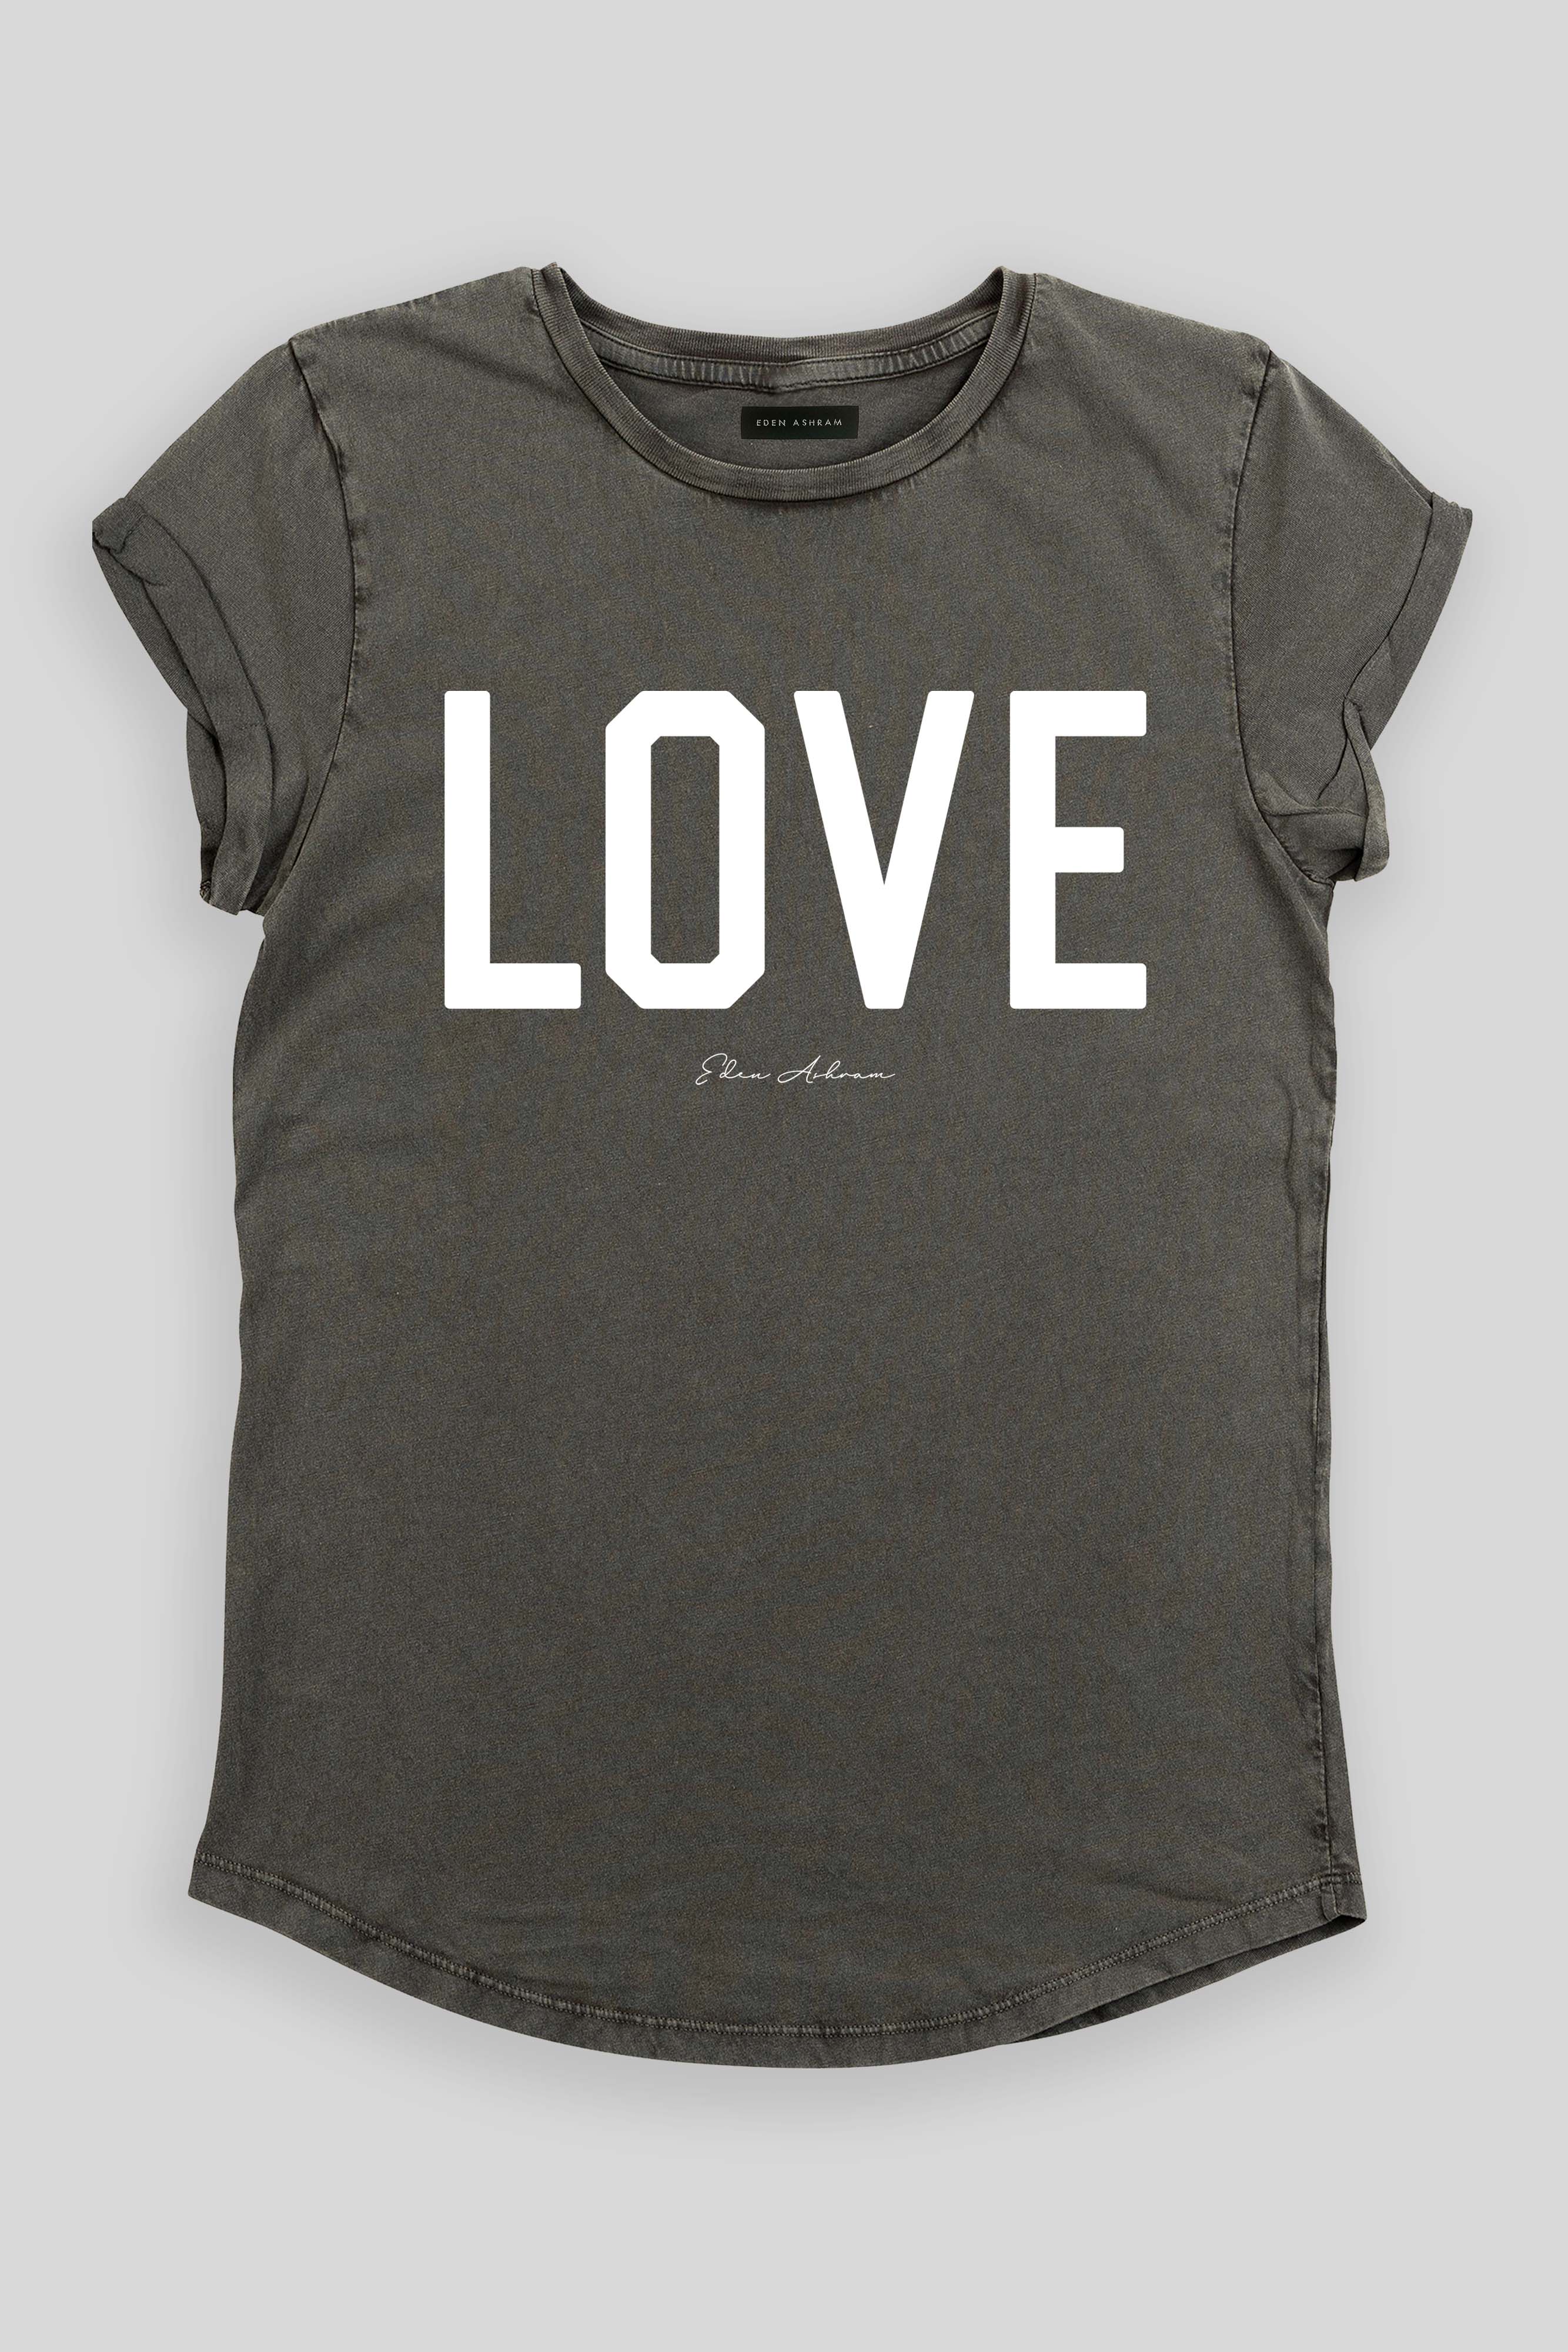 EDEN ASHRAM LOVE Premium Rolled Sleeve T-Shirt Stonewash Grey